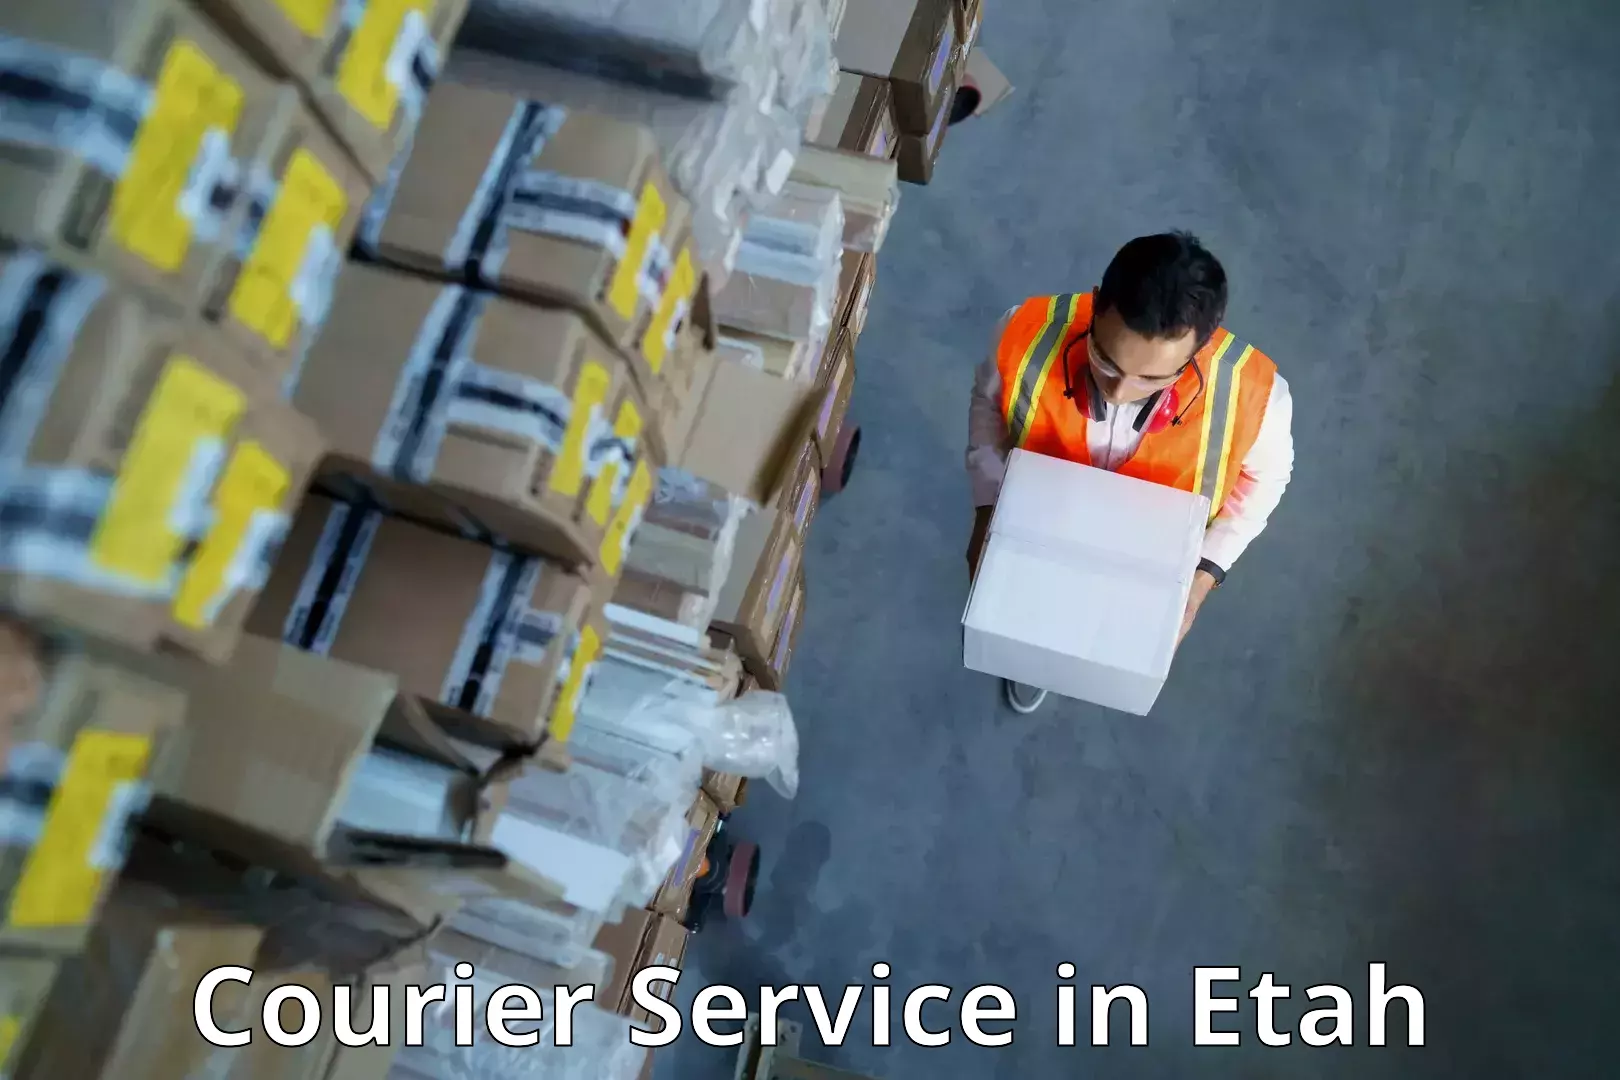 Express delivery capabilities in Etah